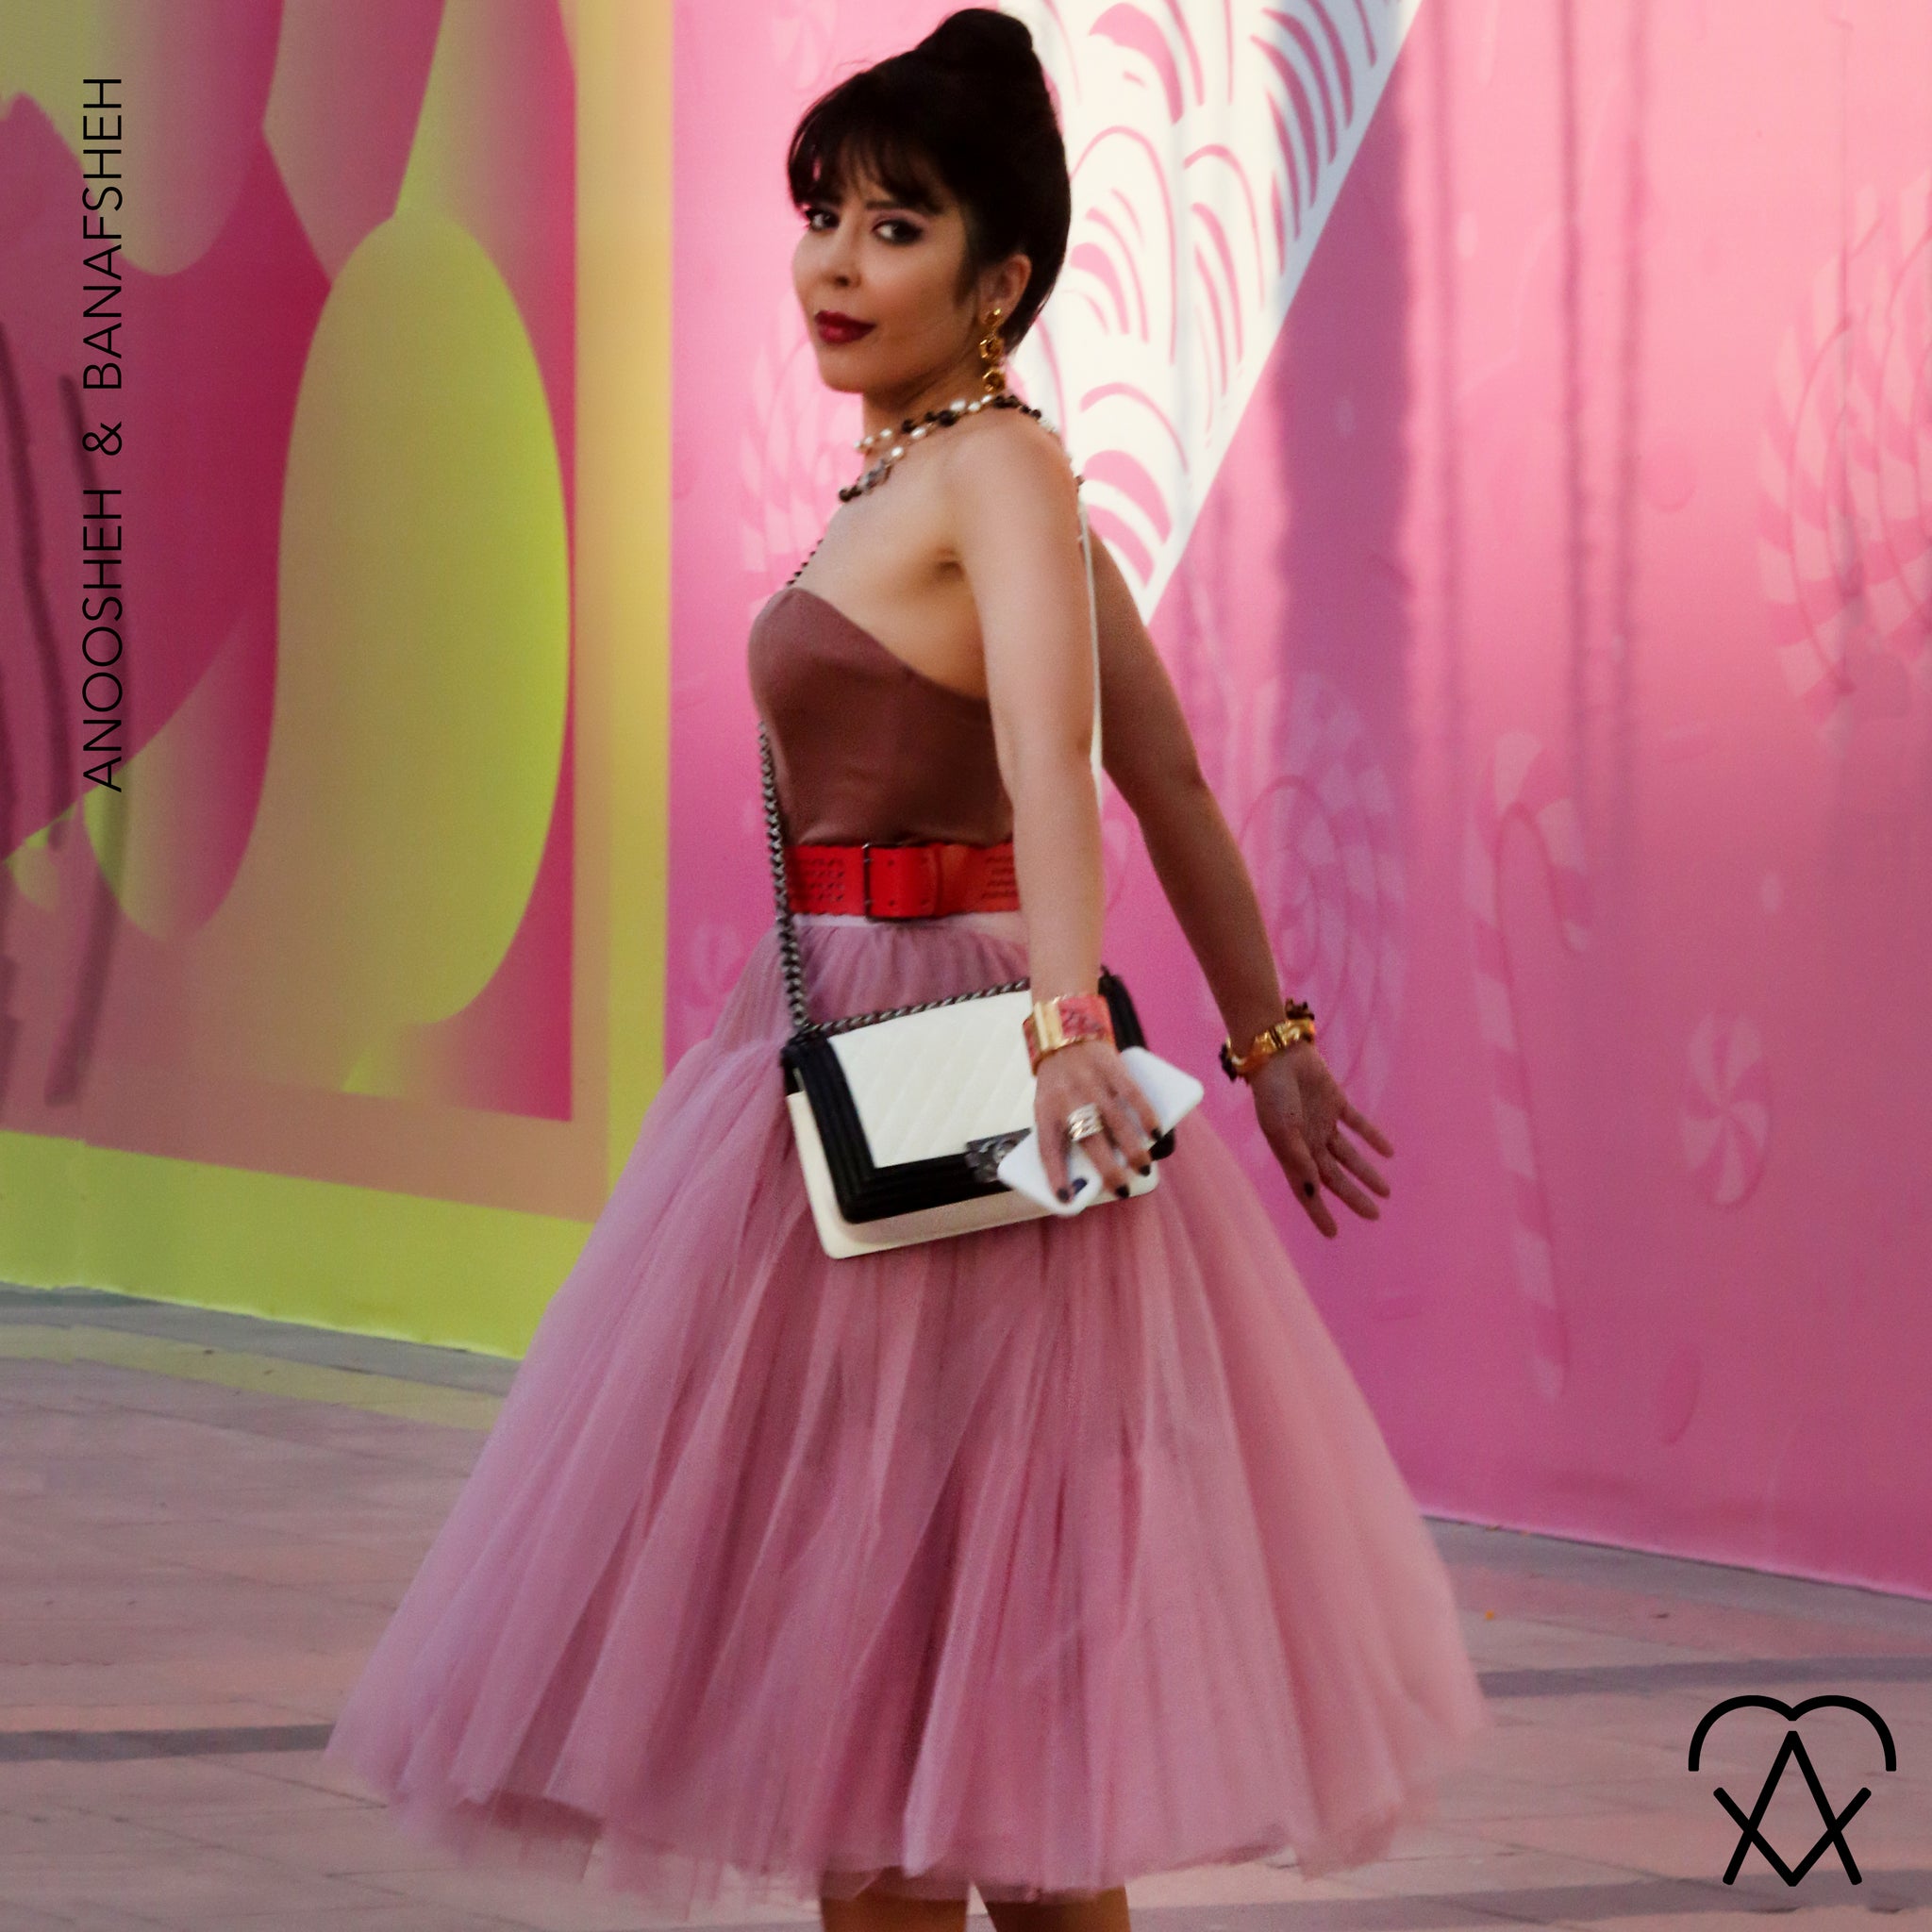 Anoosheh & Banafsheh article on chic loungewear and sleepwear wearing Dolce and Gabbana Pink Tulle Skirt